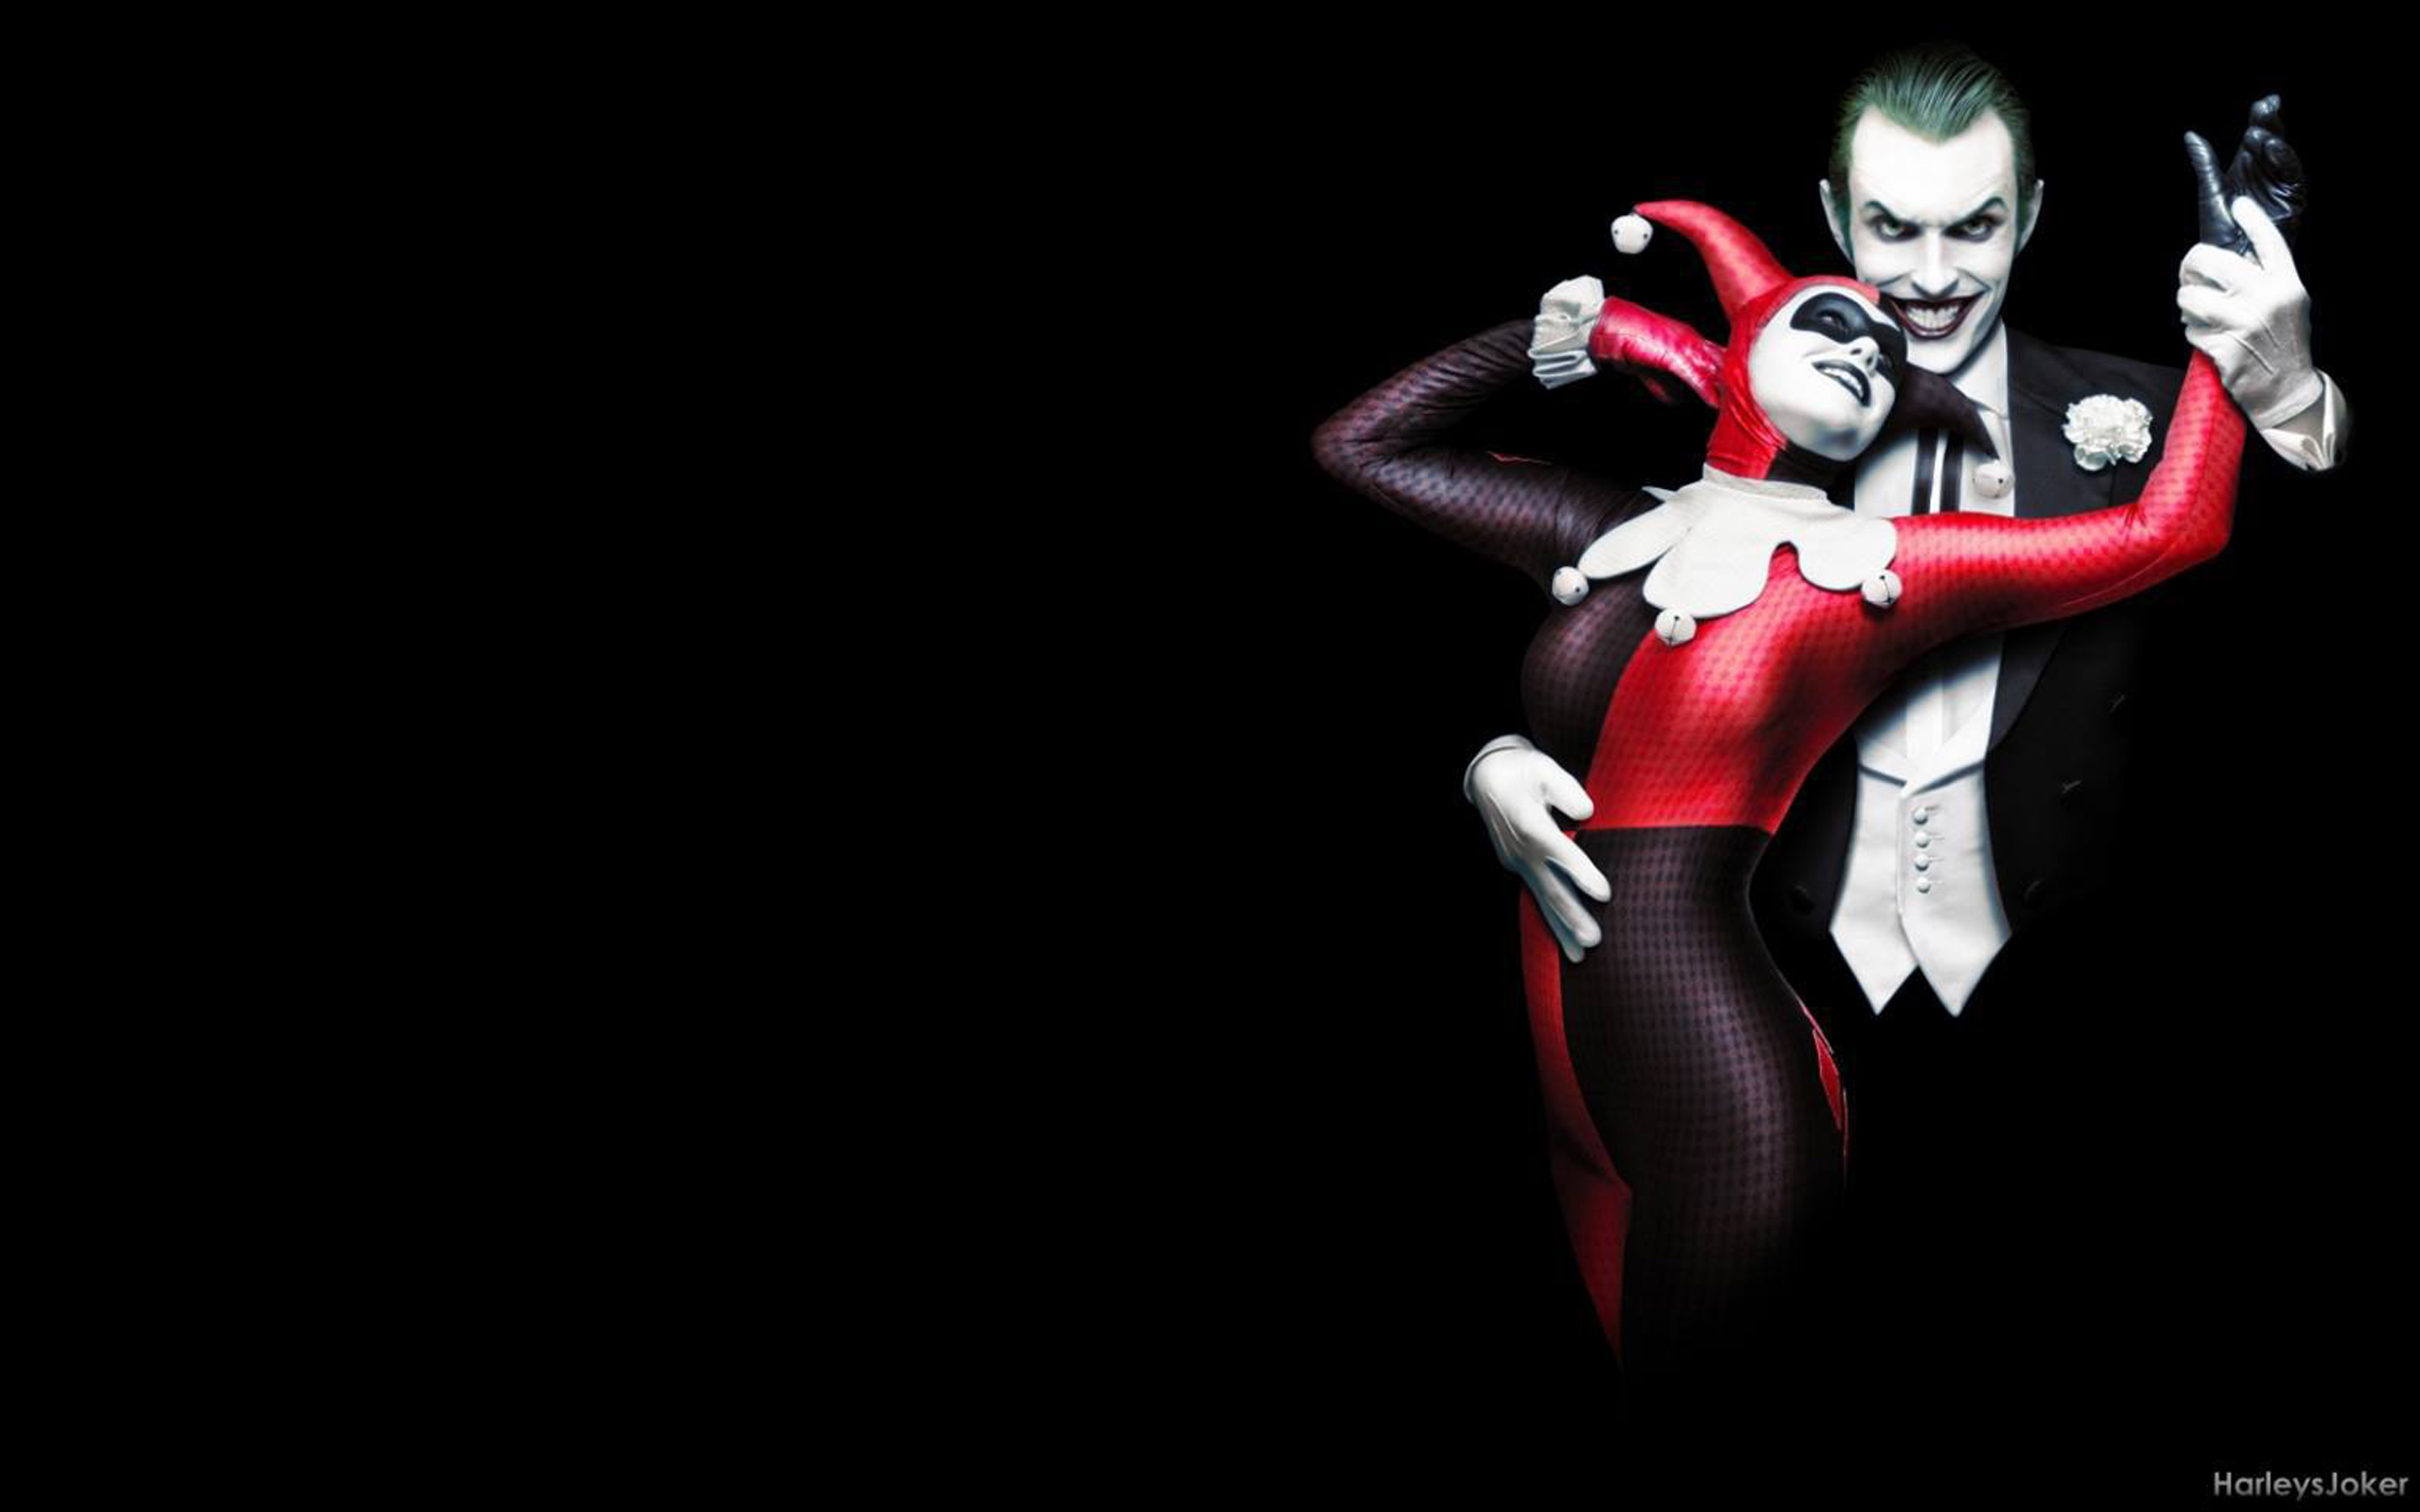 Joker And Harley Cosplay Of Alex Ross S Game With The Devil Hd Desktop Backgrounds Free Download Wallpapers13 Com Joker, joker (2019 movie), joaquin phoenix. devil hd desktop backgrounds free